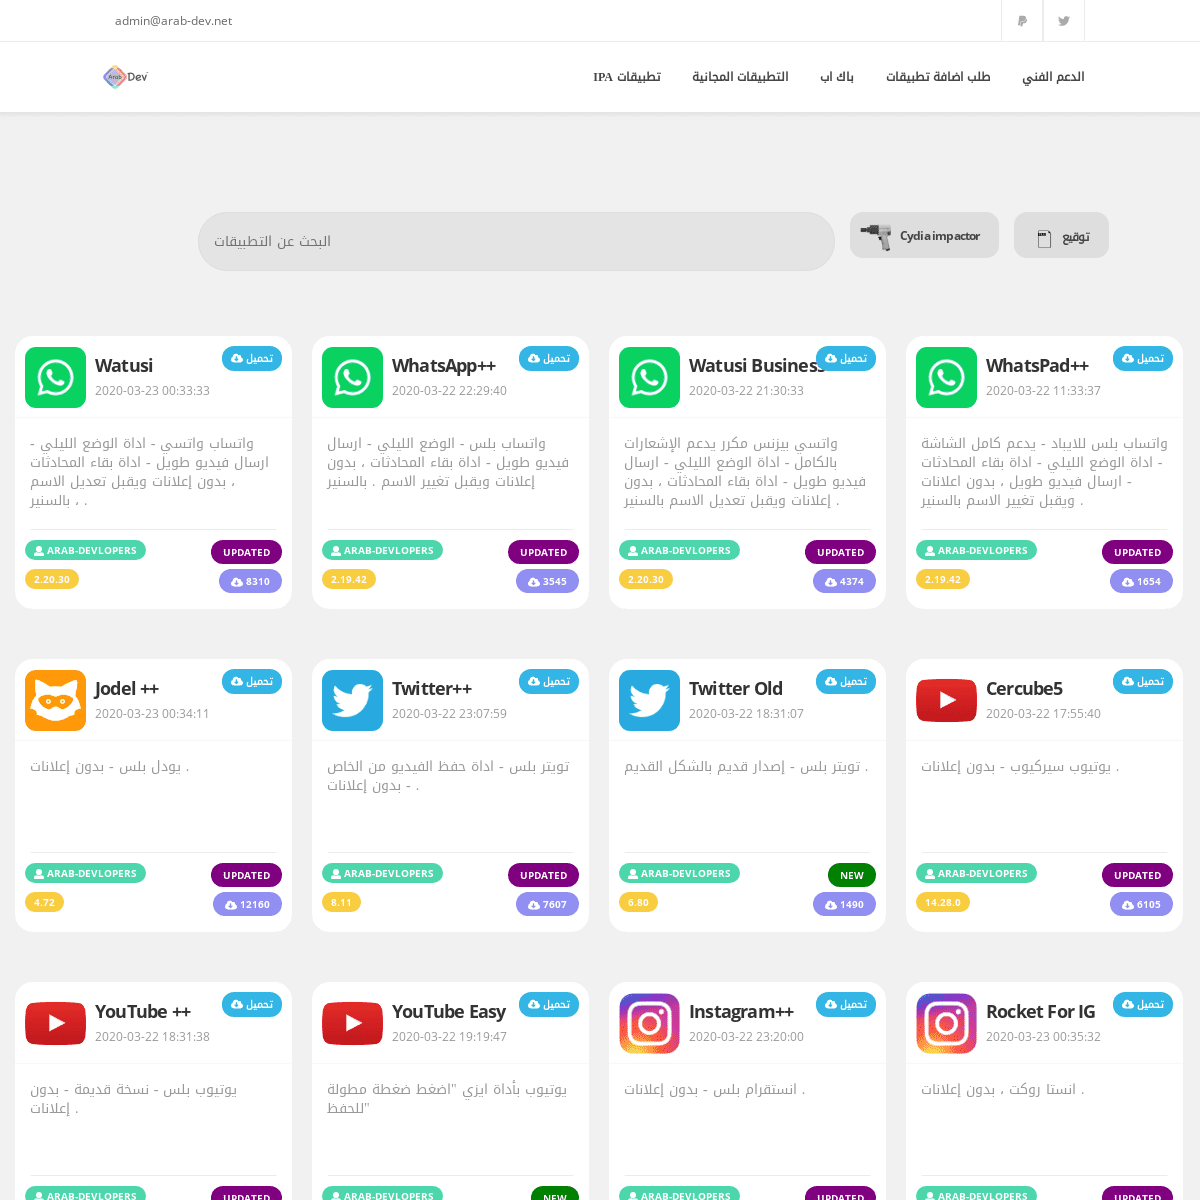 A complete backup of arab-dev.net